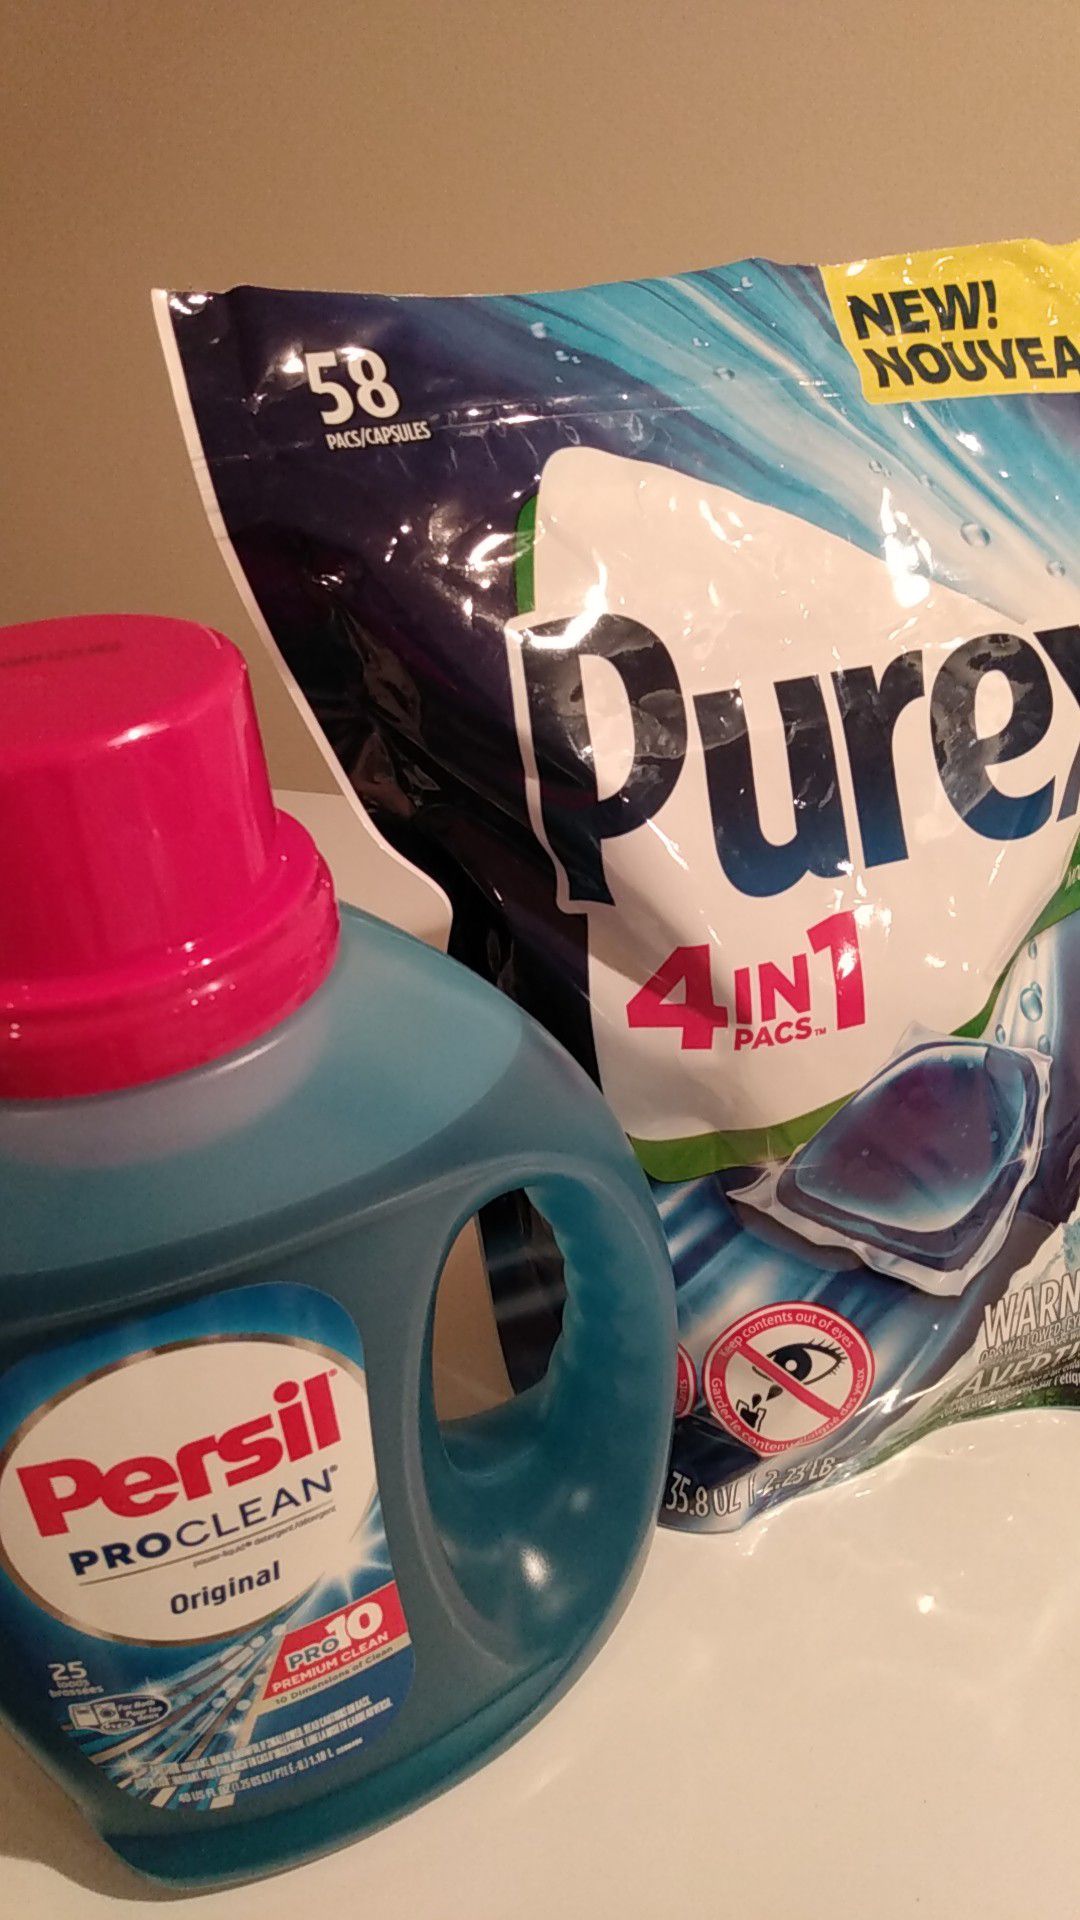 Laundry detergent